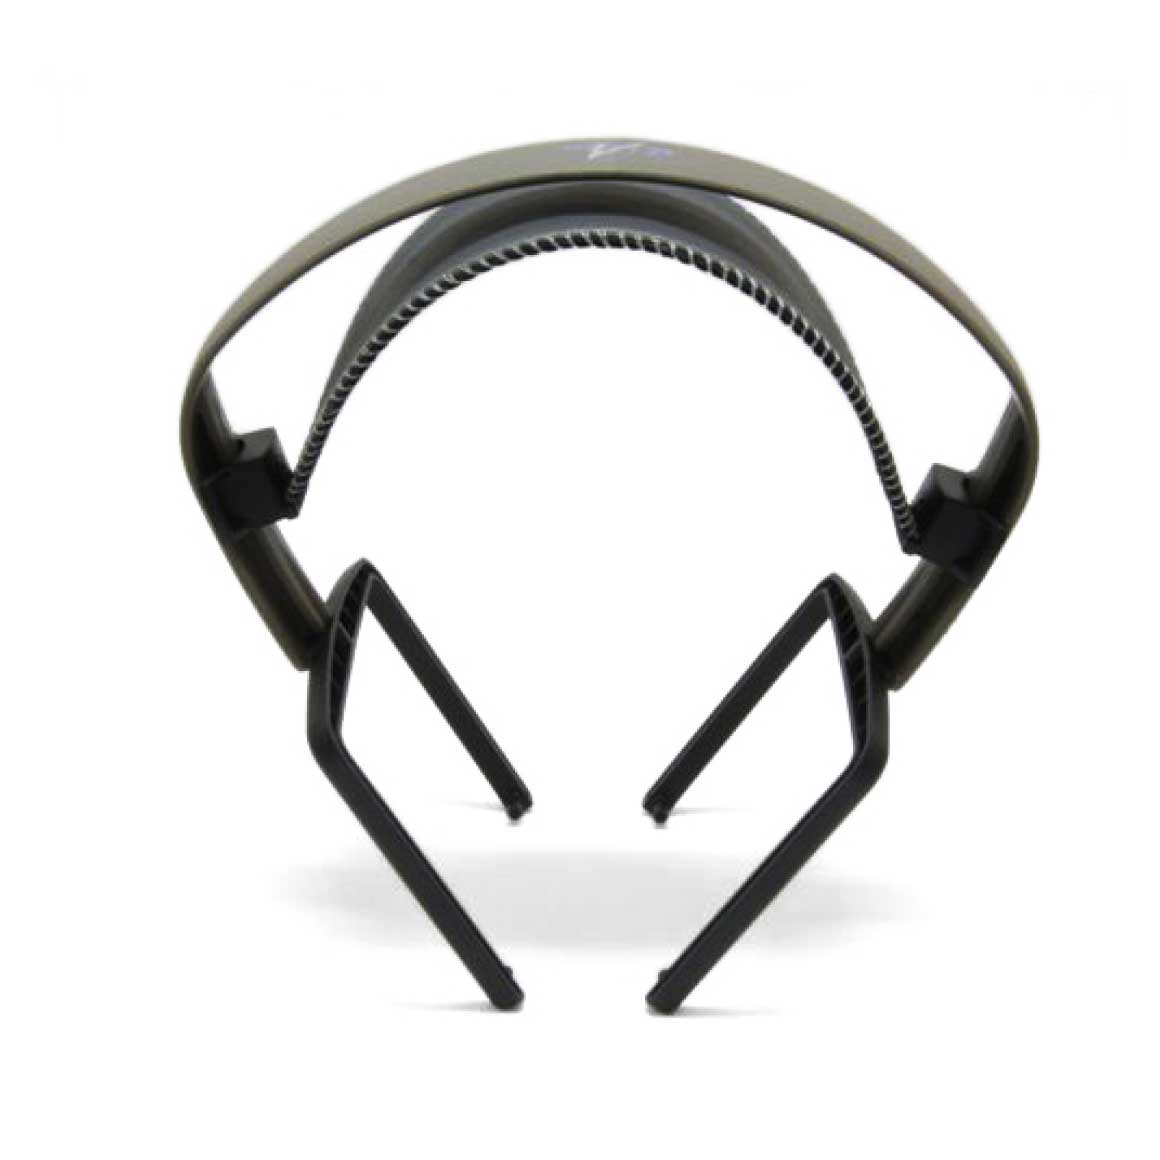 Headphone-Zone-STAX-Headband Assembly for SR-Lambda Series (SR-L) Earspeakers